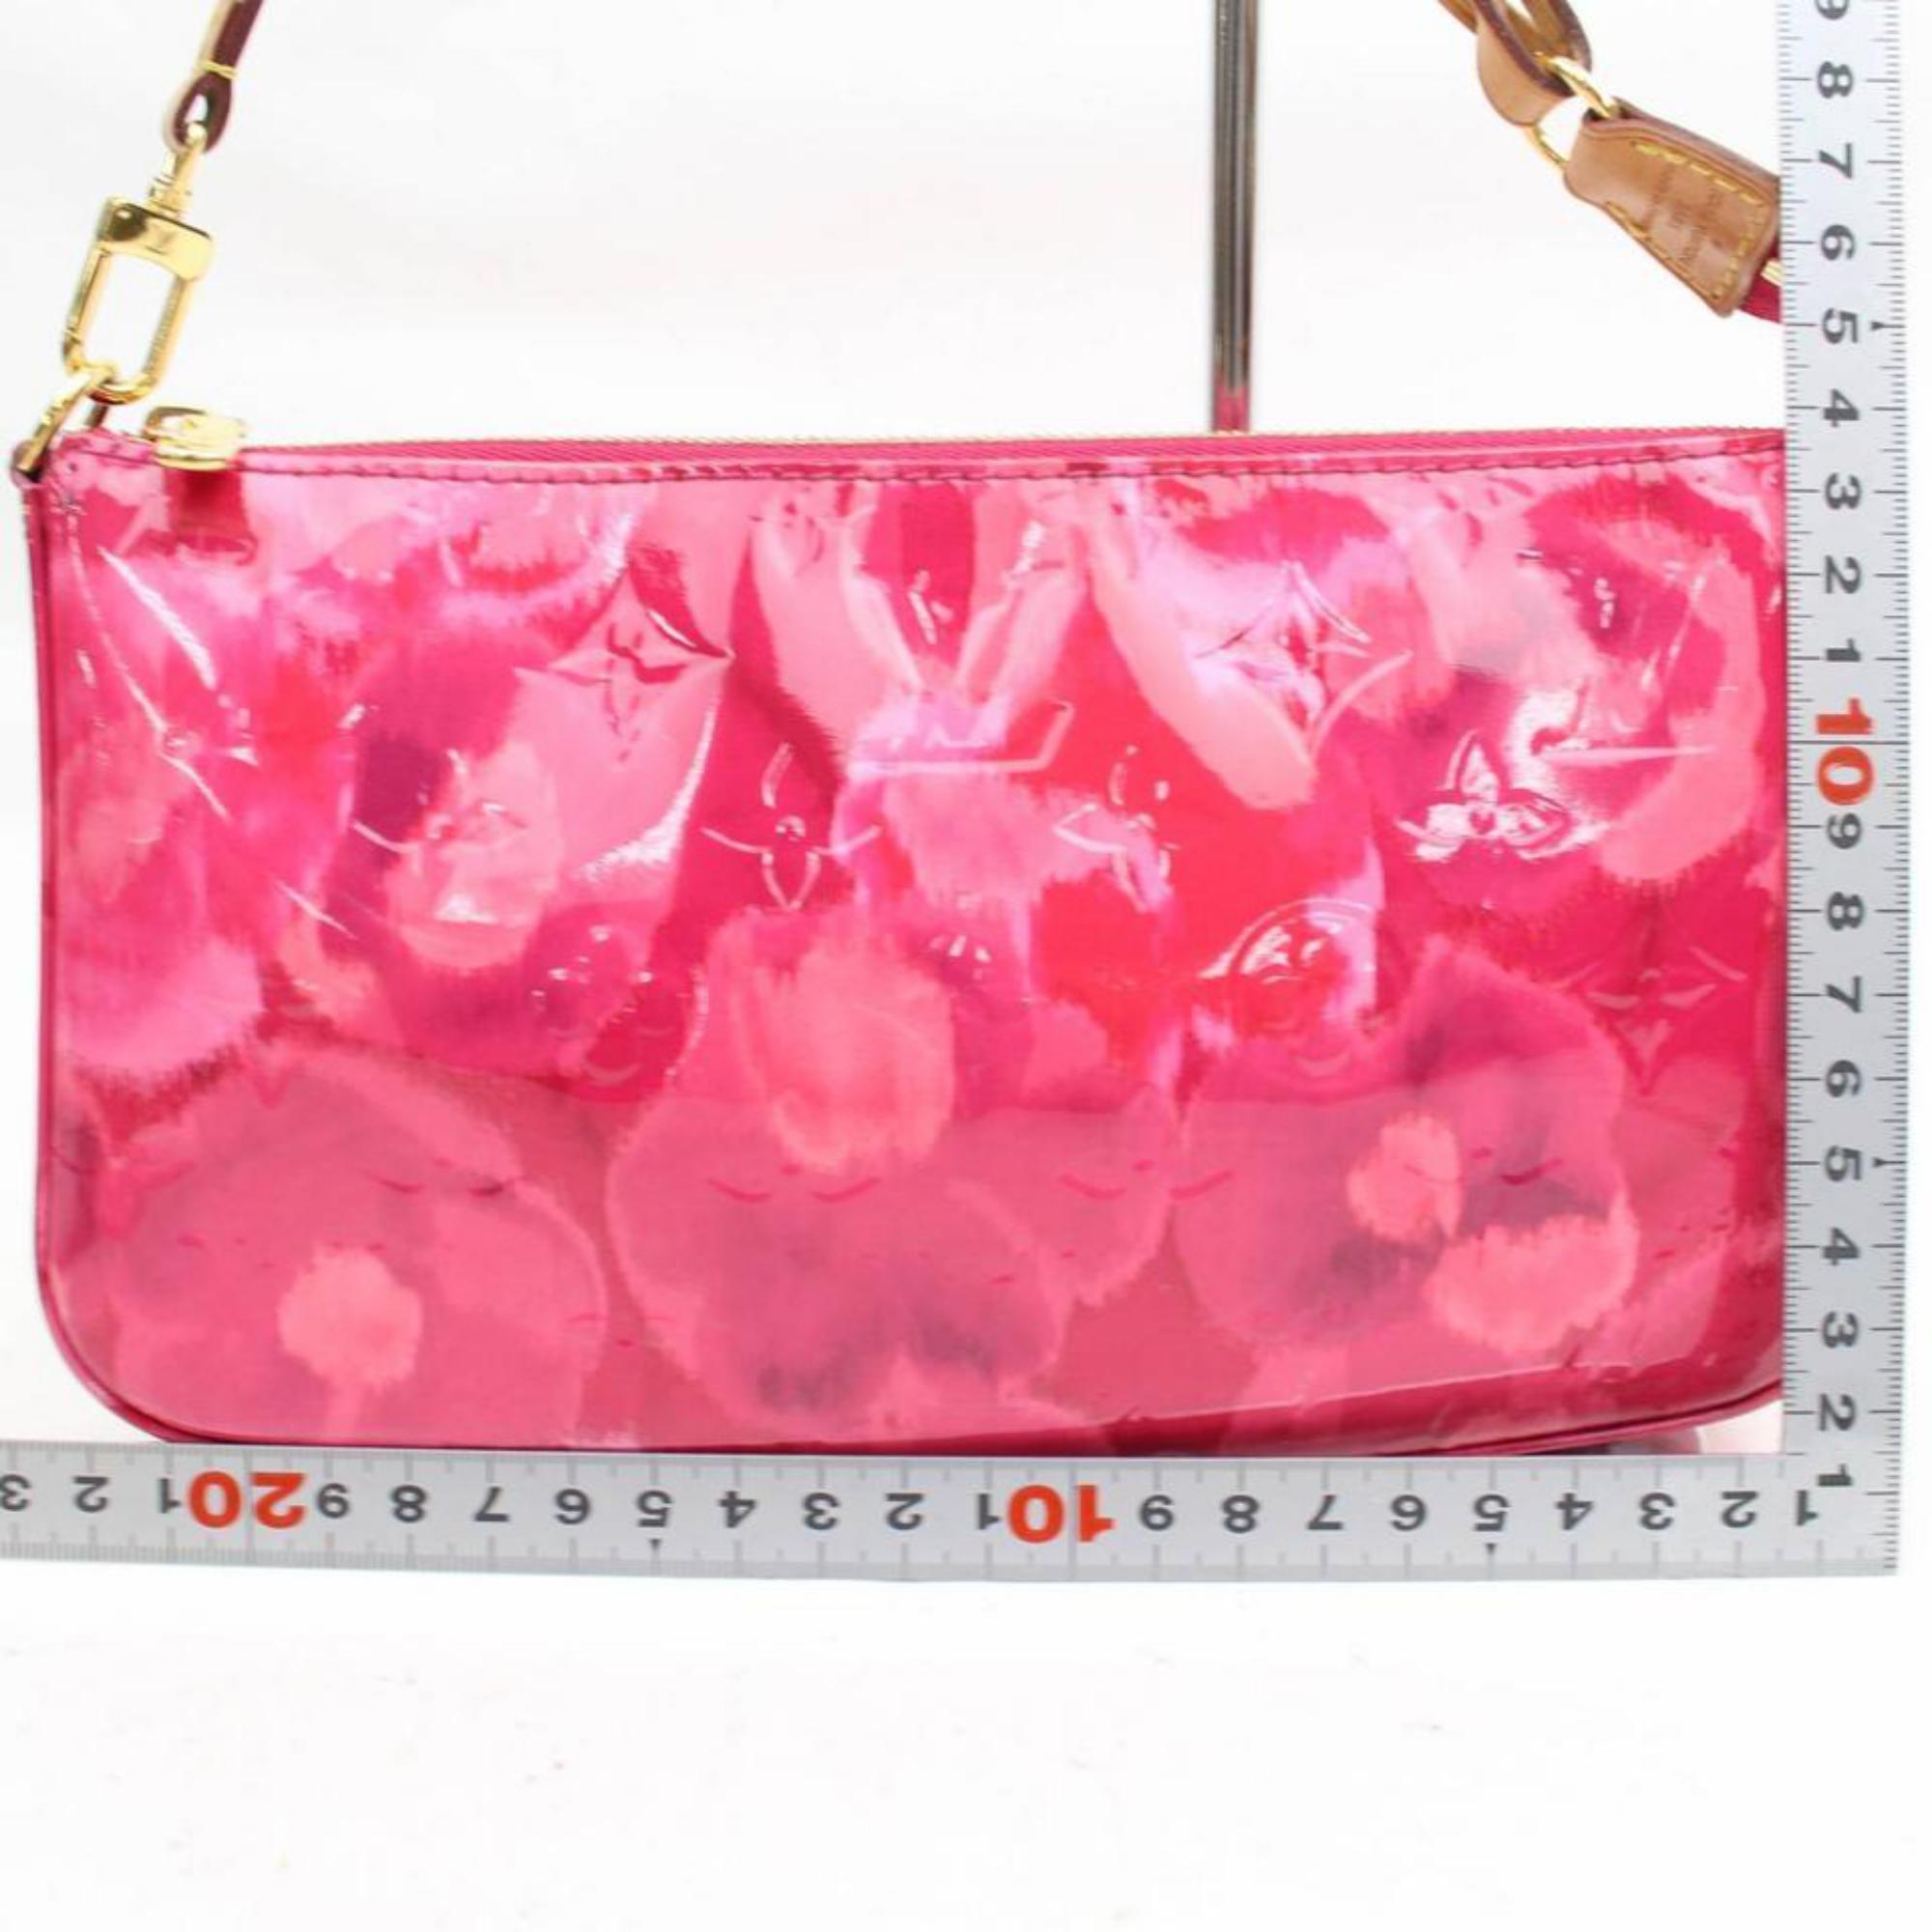 Louis Vuitton Pochette Vernis Ikat Nm Rose Velours 868290 Shoulder Bag For Sale 1